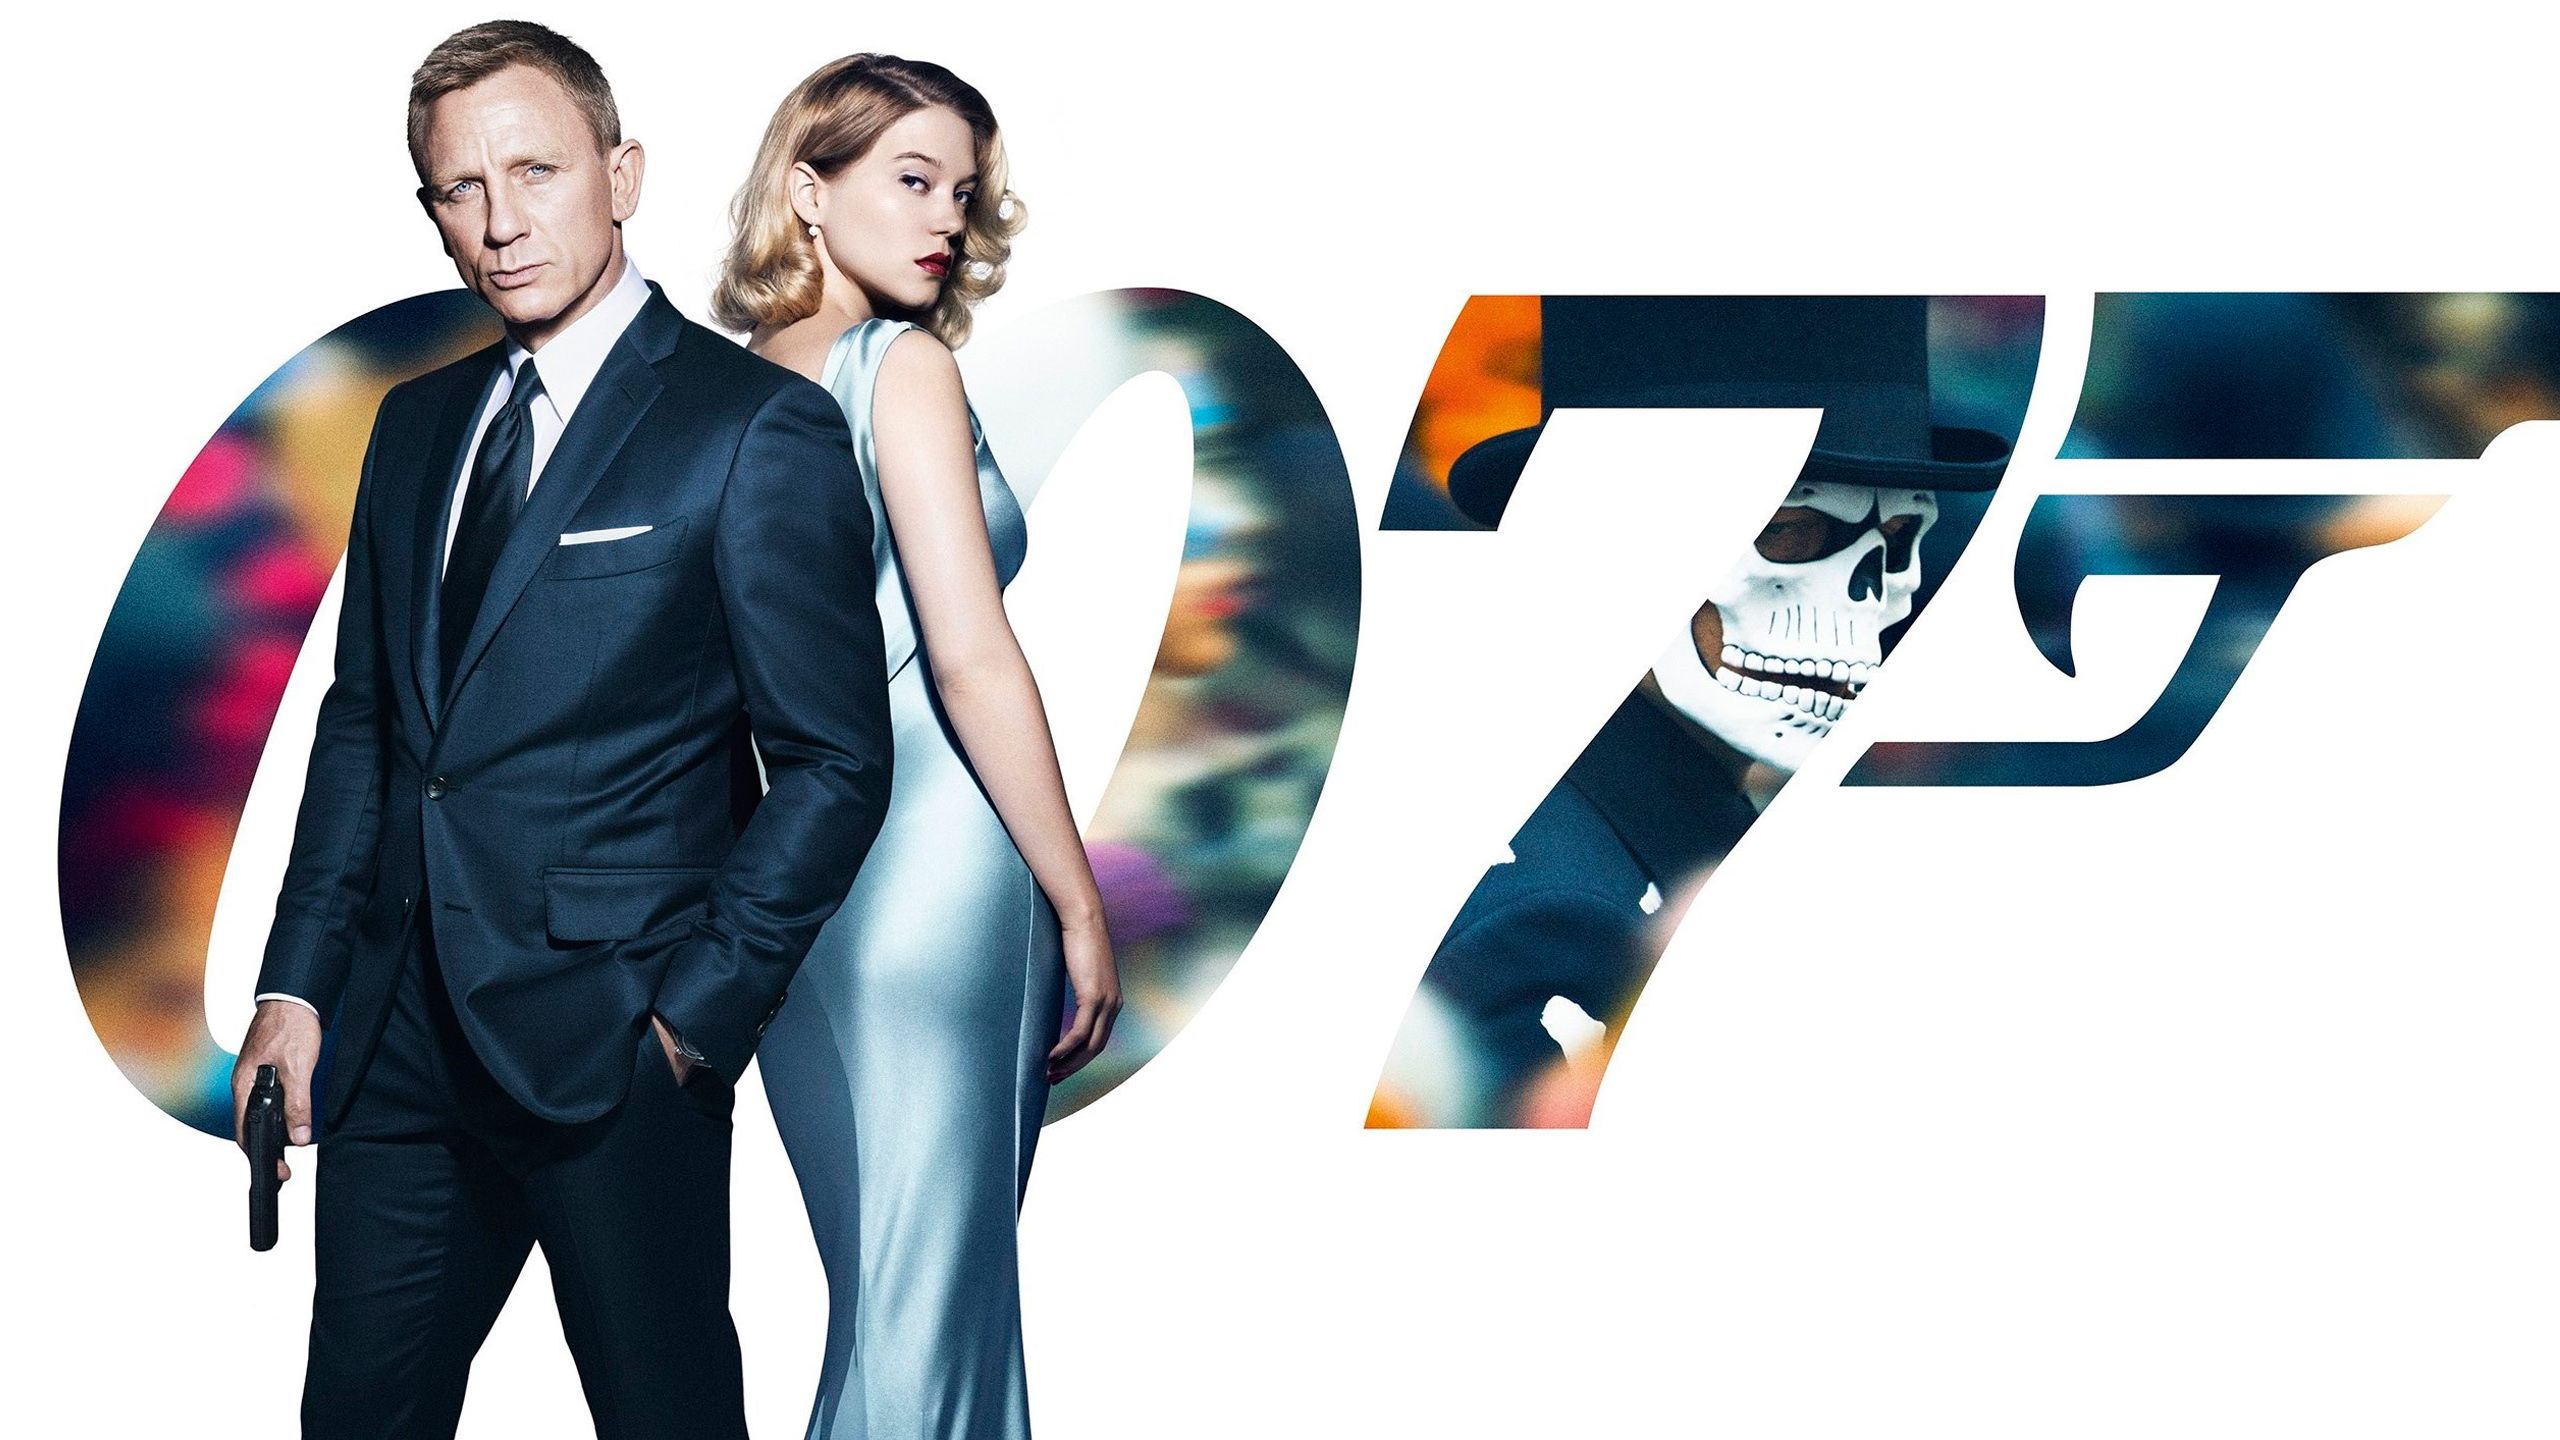 Free download Spectre 2015 Bond Movie Wallpaper HD Wallpaper [2560x1440] for your Desktop, Mobile & Tablet. Explore Spectre Movie Wallpaper Wallpaper, James Bond Spectre Wallpaper, 007 Spectre Wallpaper